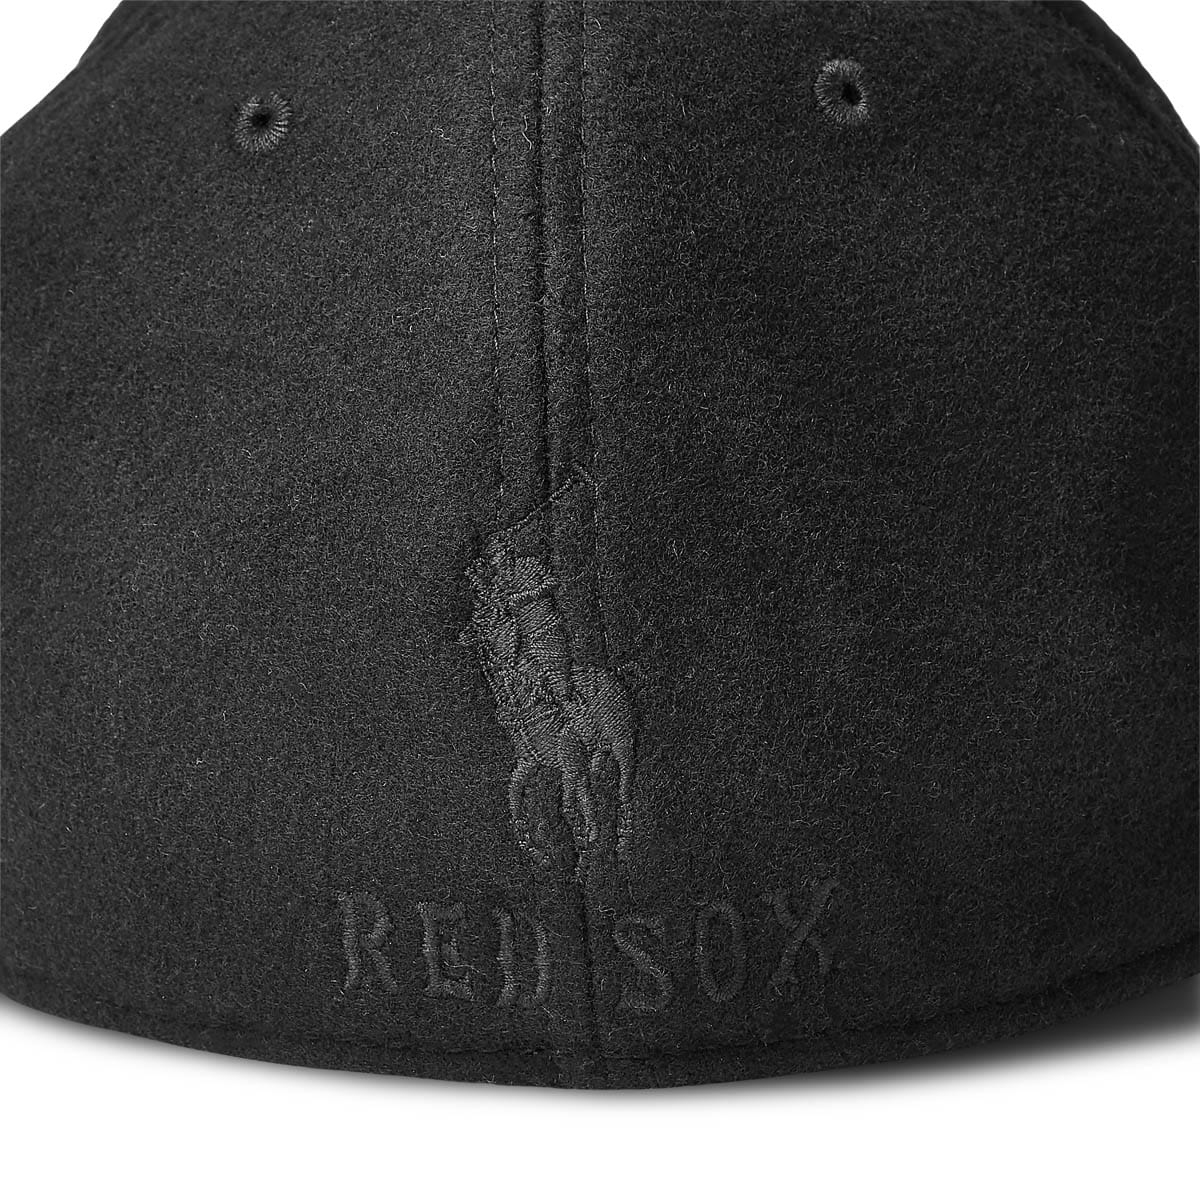 Polo Ralph Lauren x MLB Headwear COMING SOON: 49 FORTY CAP - BOSTON RED SOX